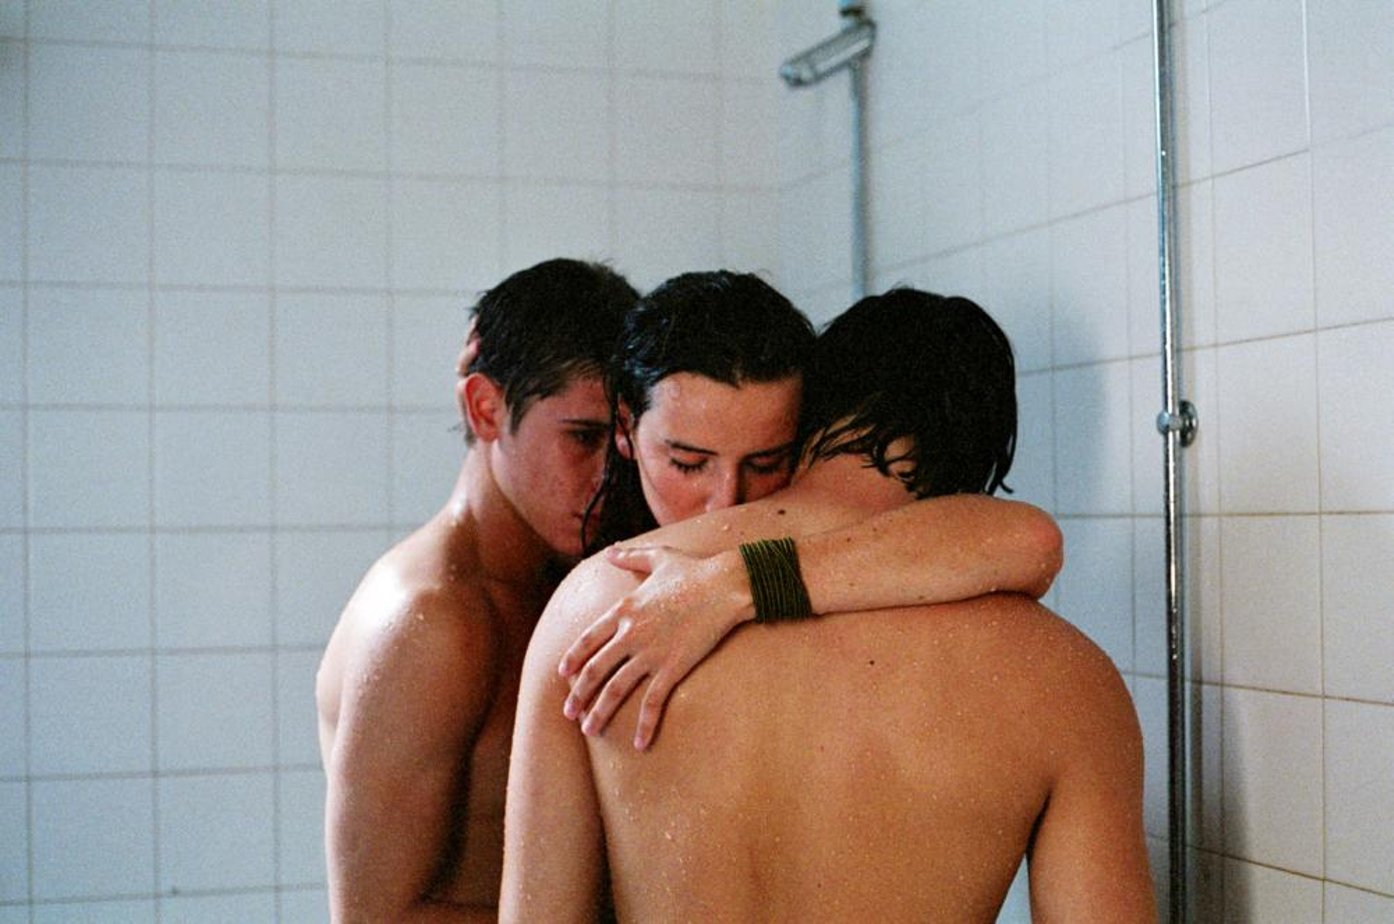 Threesome shower mmf